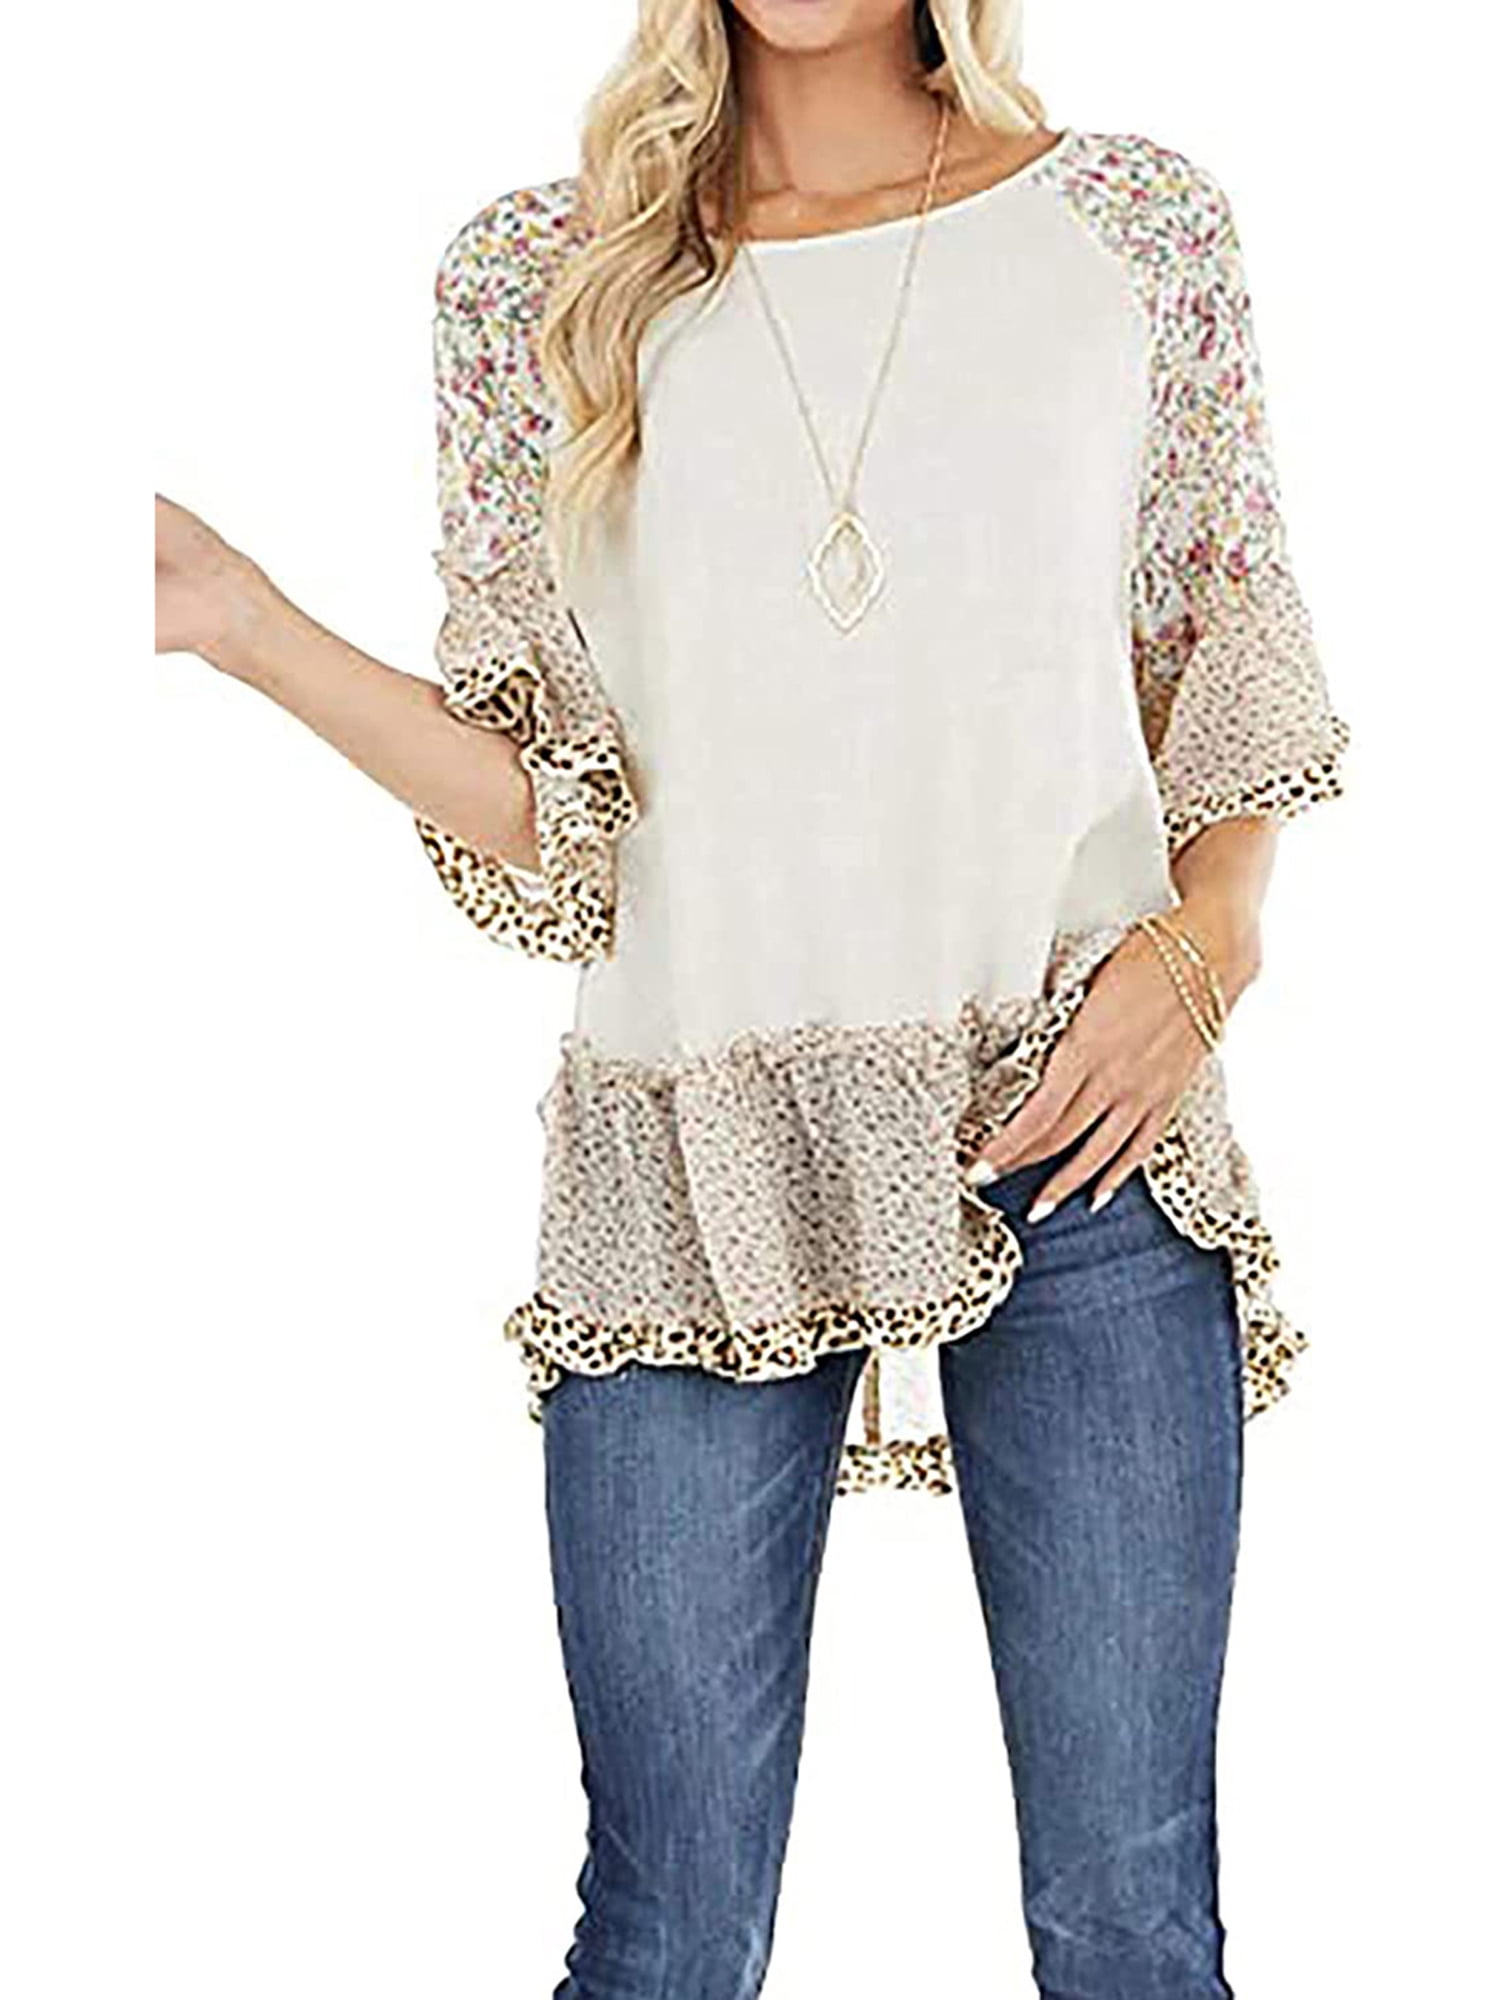 Vintage Crochet Dress Tunic Hippie Boho Shirt Blouse Beige Women Beach Top Size S  M  L  XL